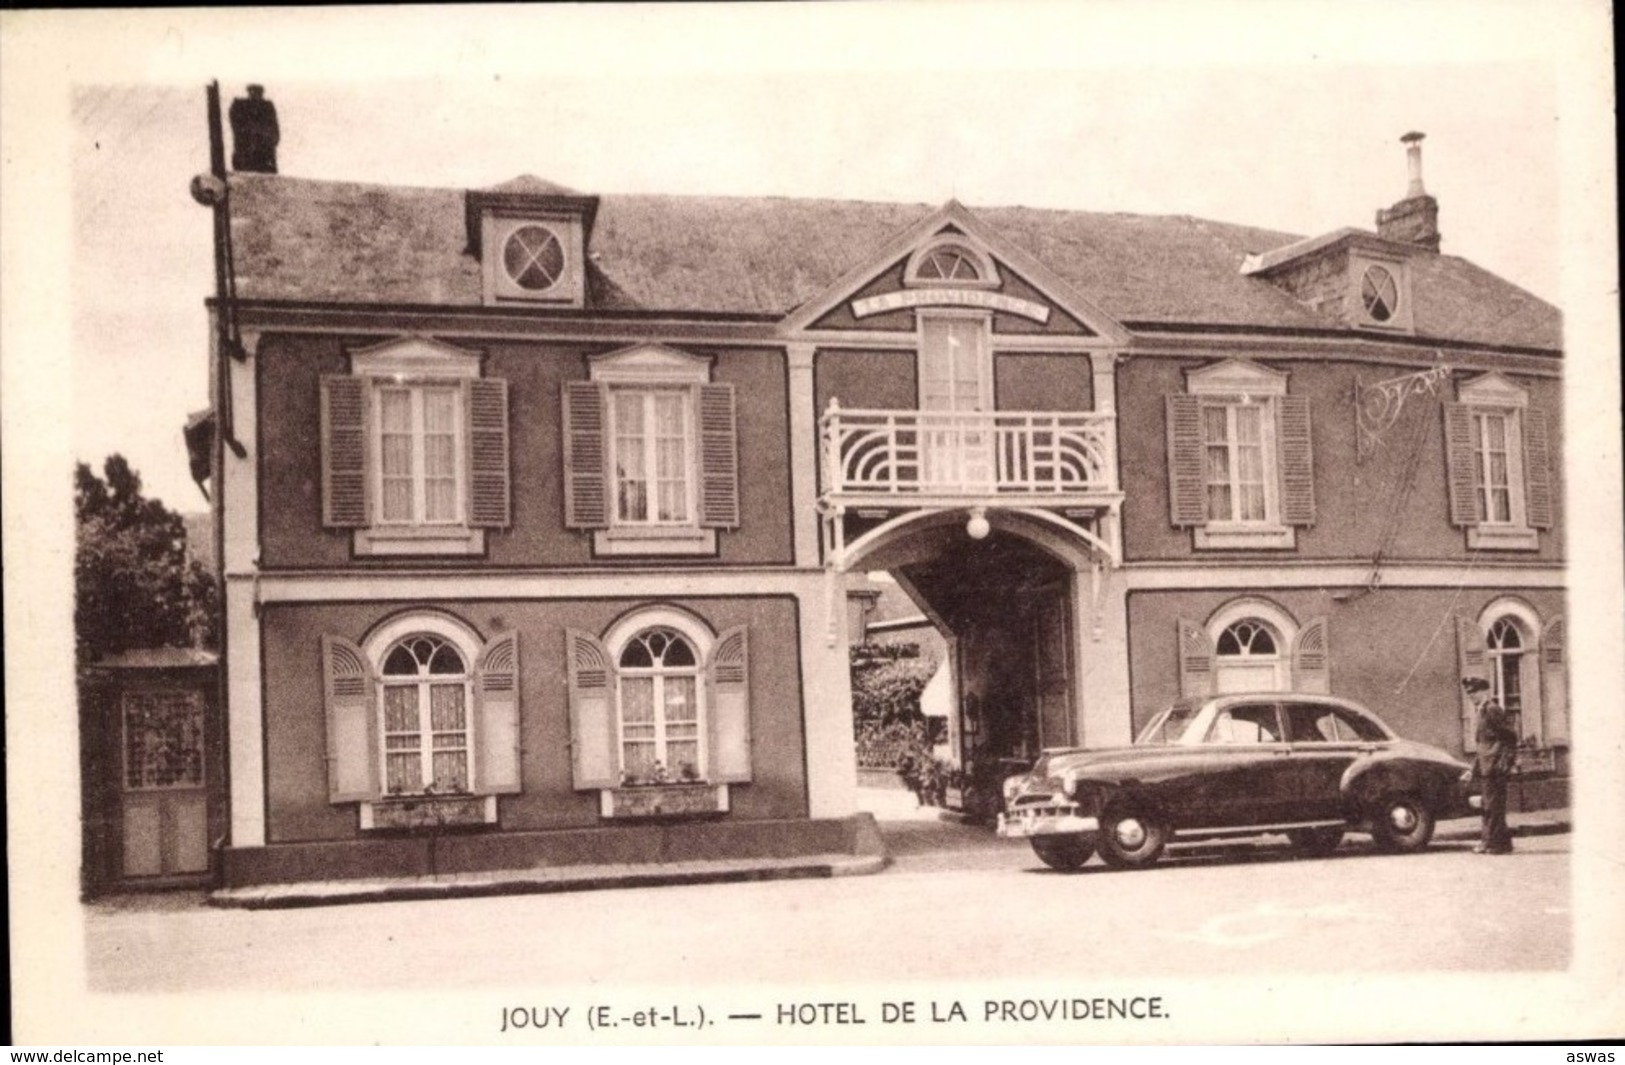 HOTEL DE LA PROVIDENCE, JOUY, EURE ET LOIR, FRANCE ~ CAR AND CHAUFFEUR - Jouy